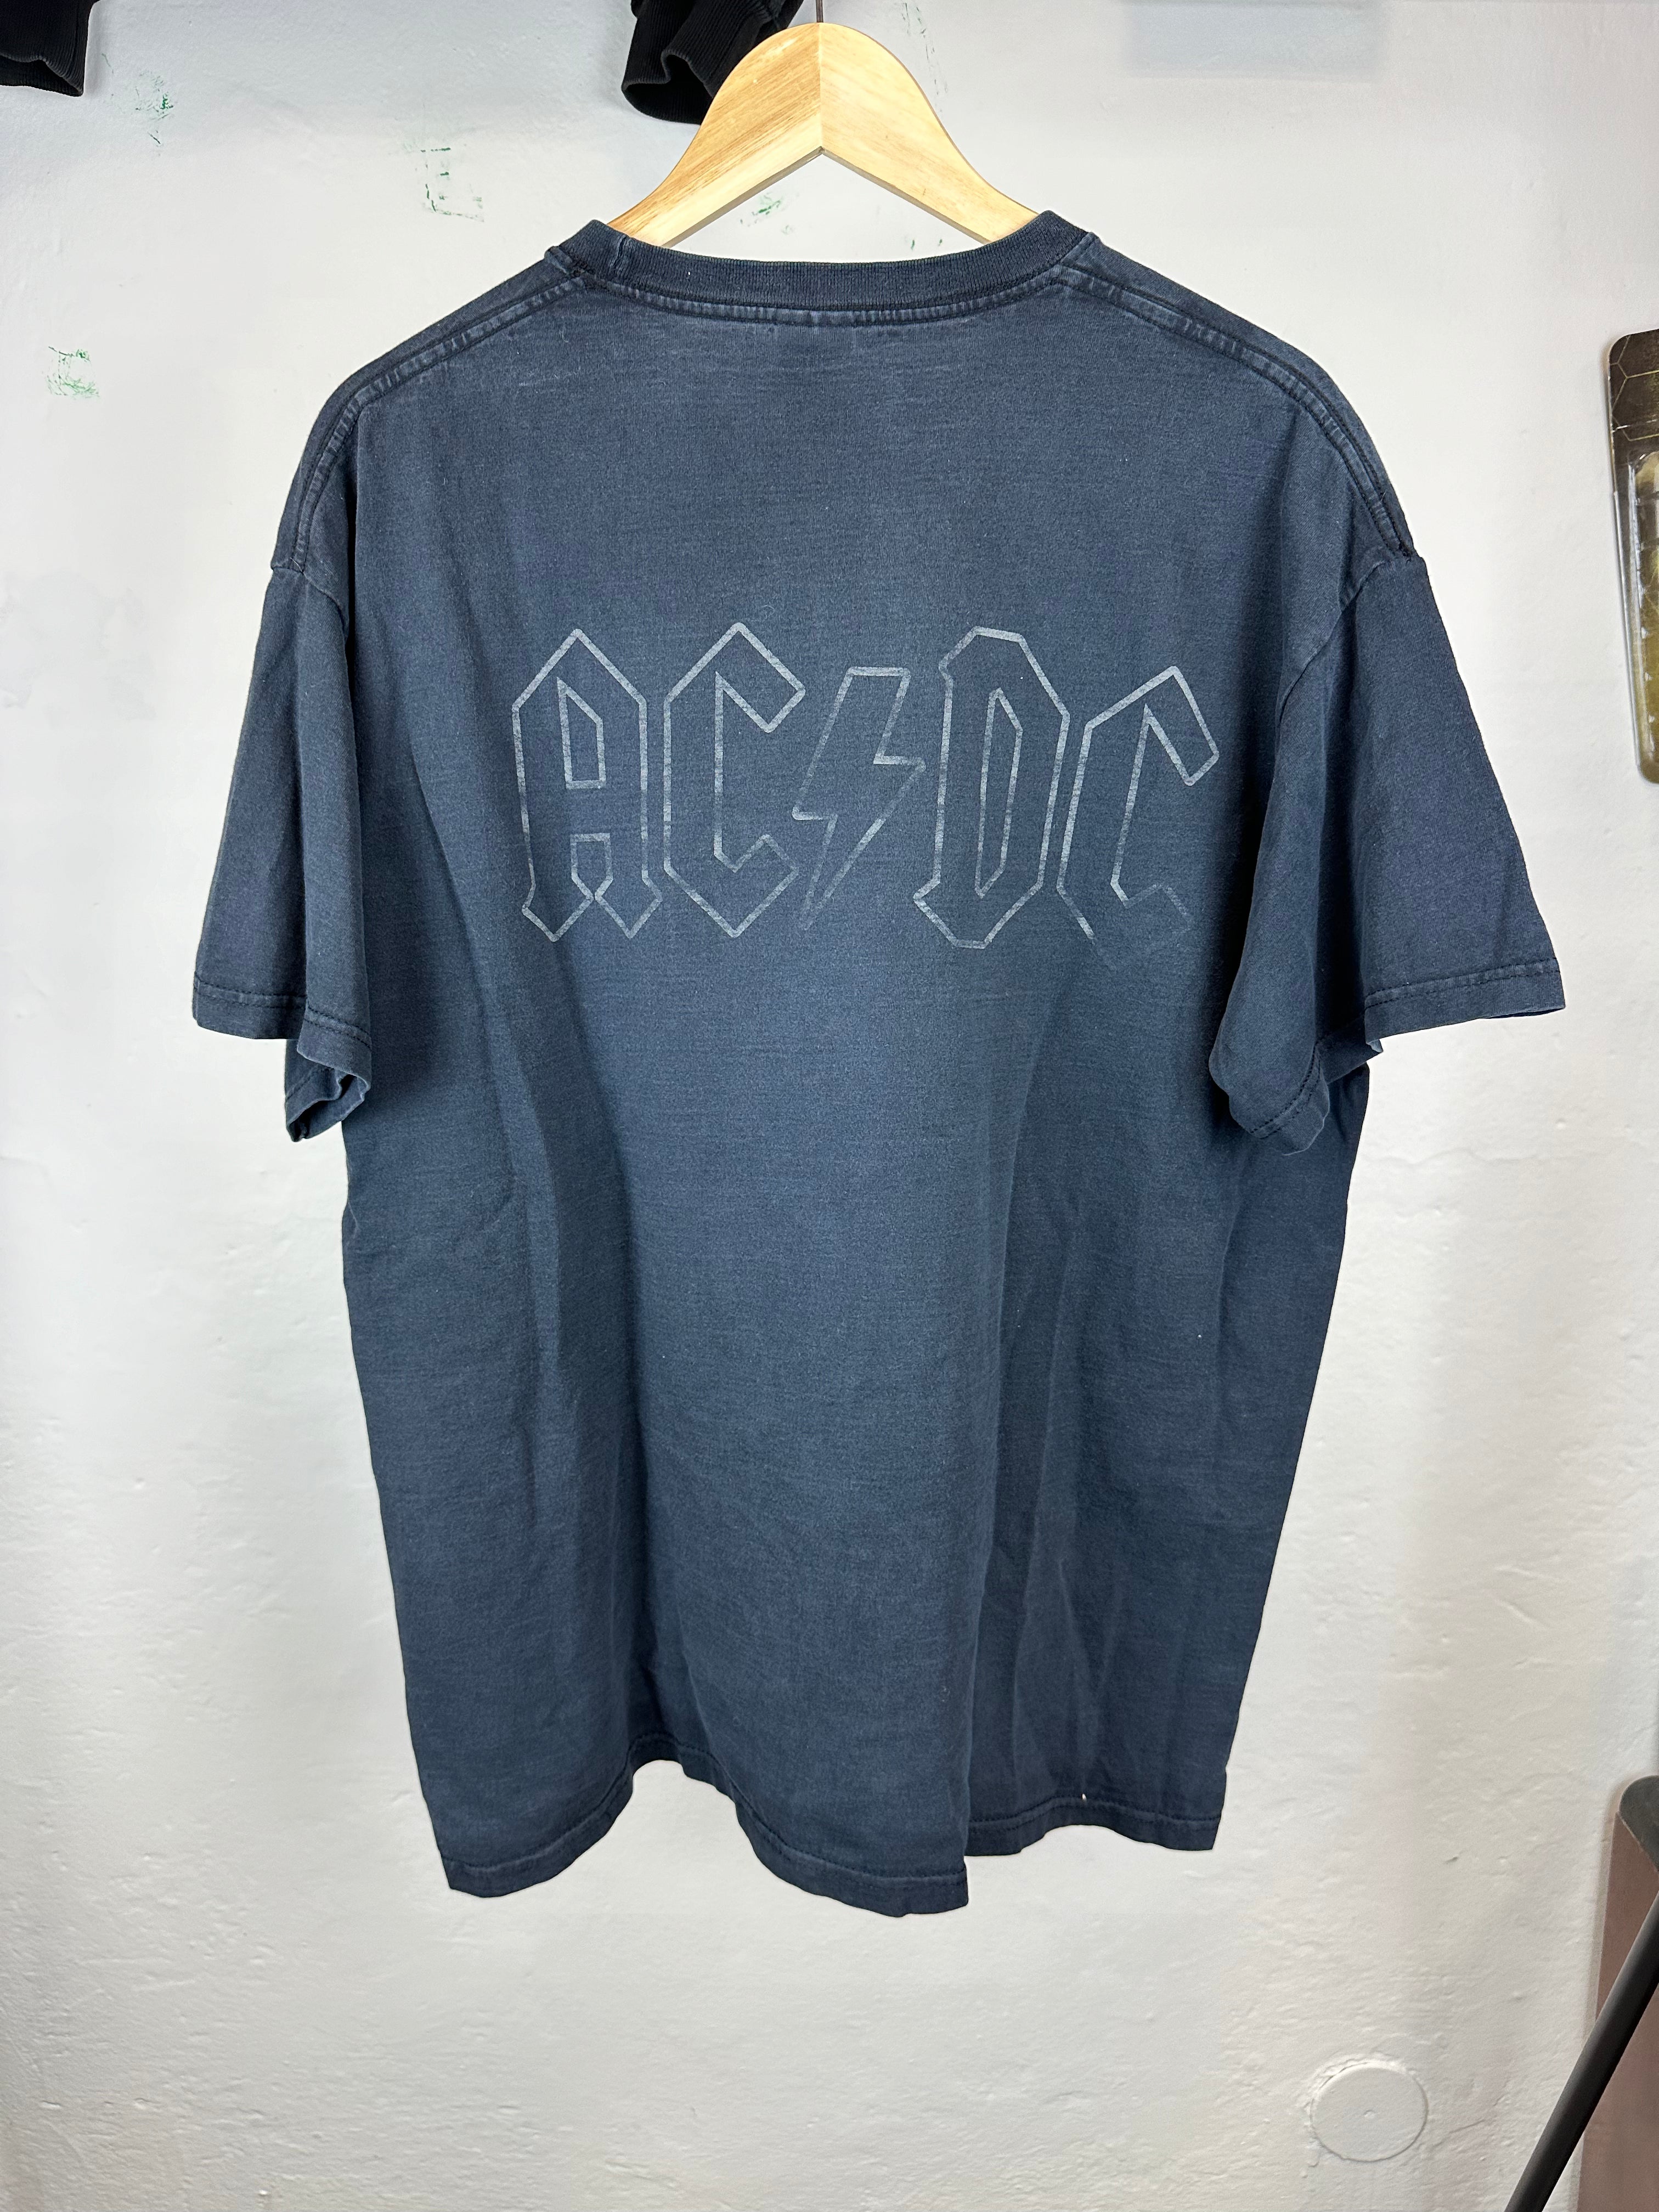 Vintage AC DC "Black Ice" T-shirt - size XL